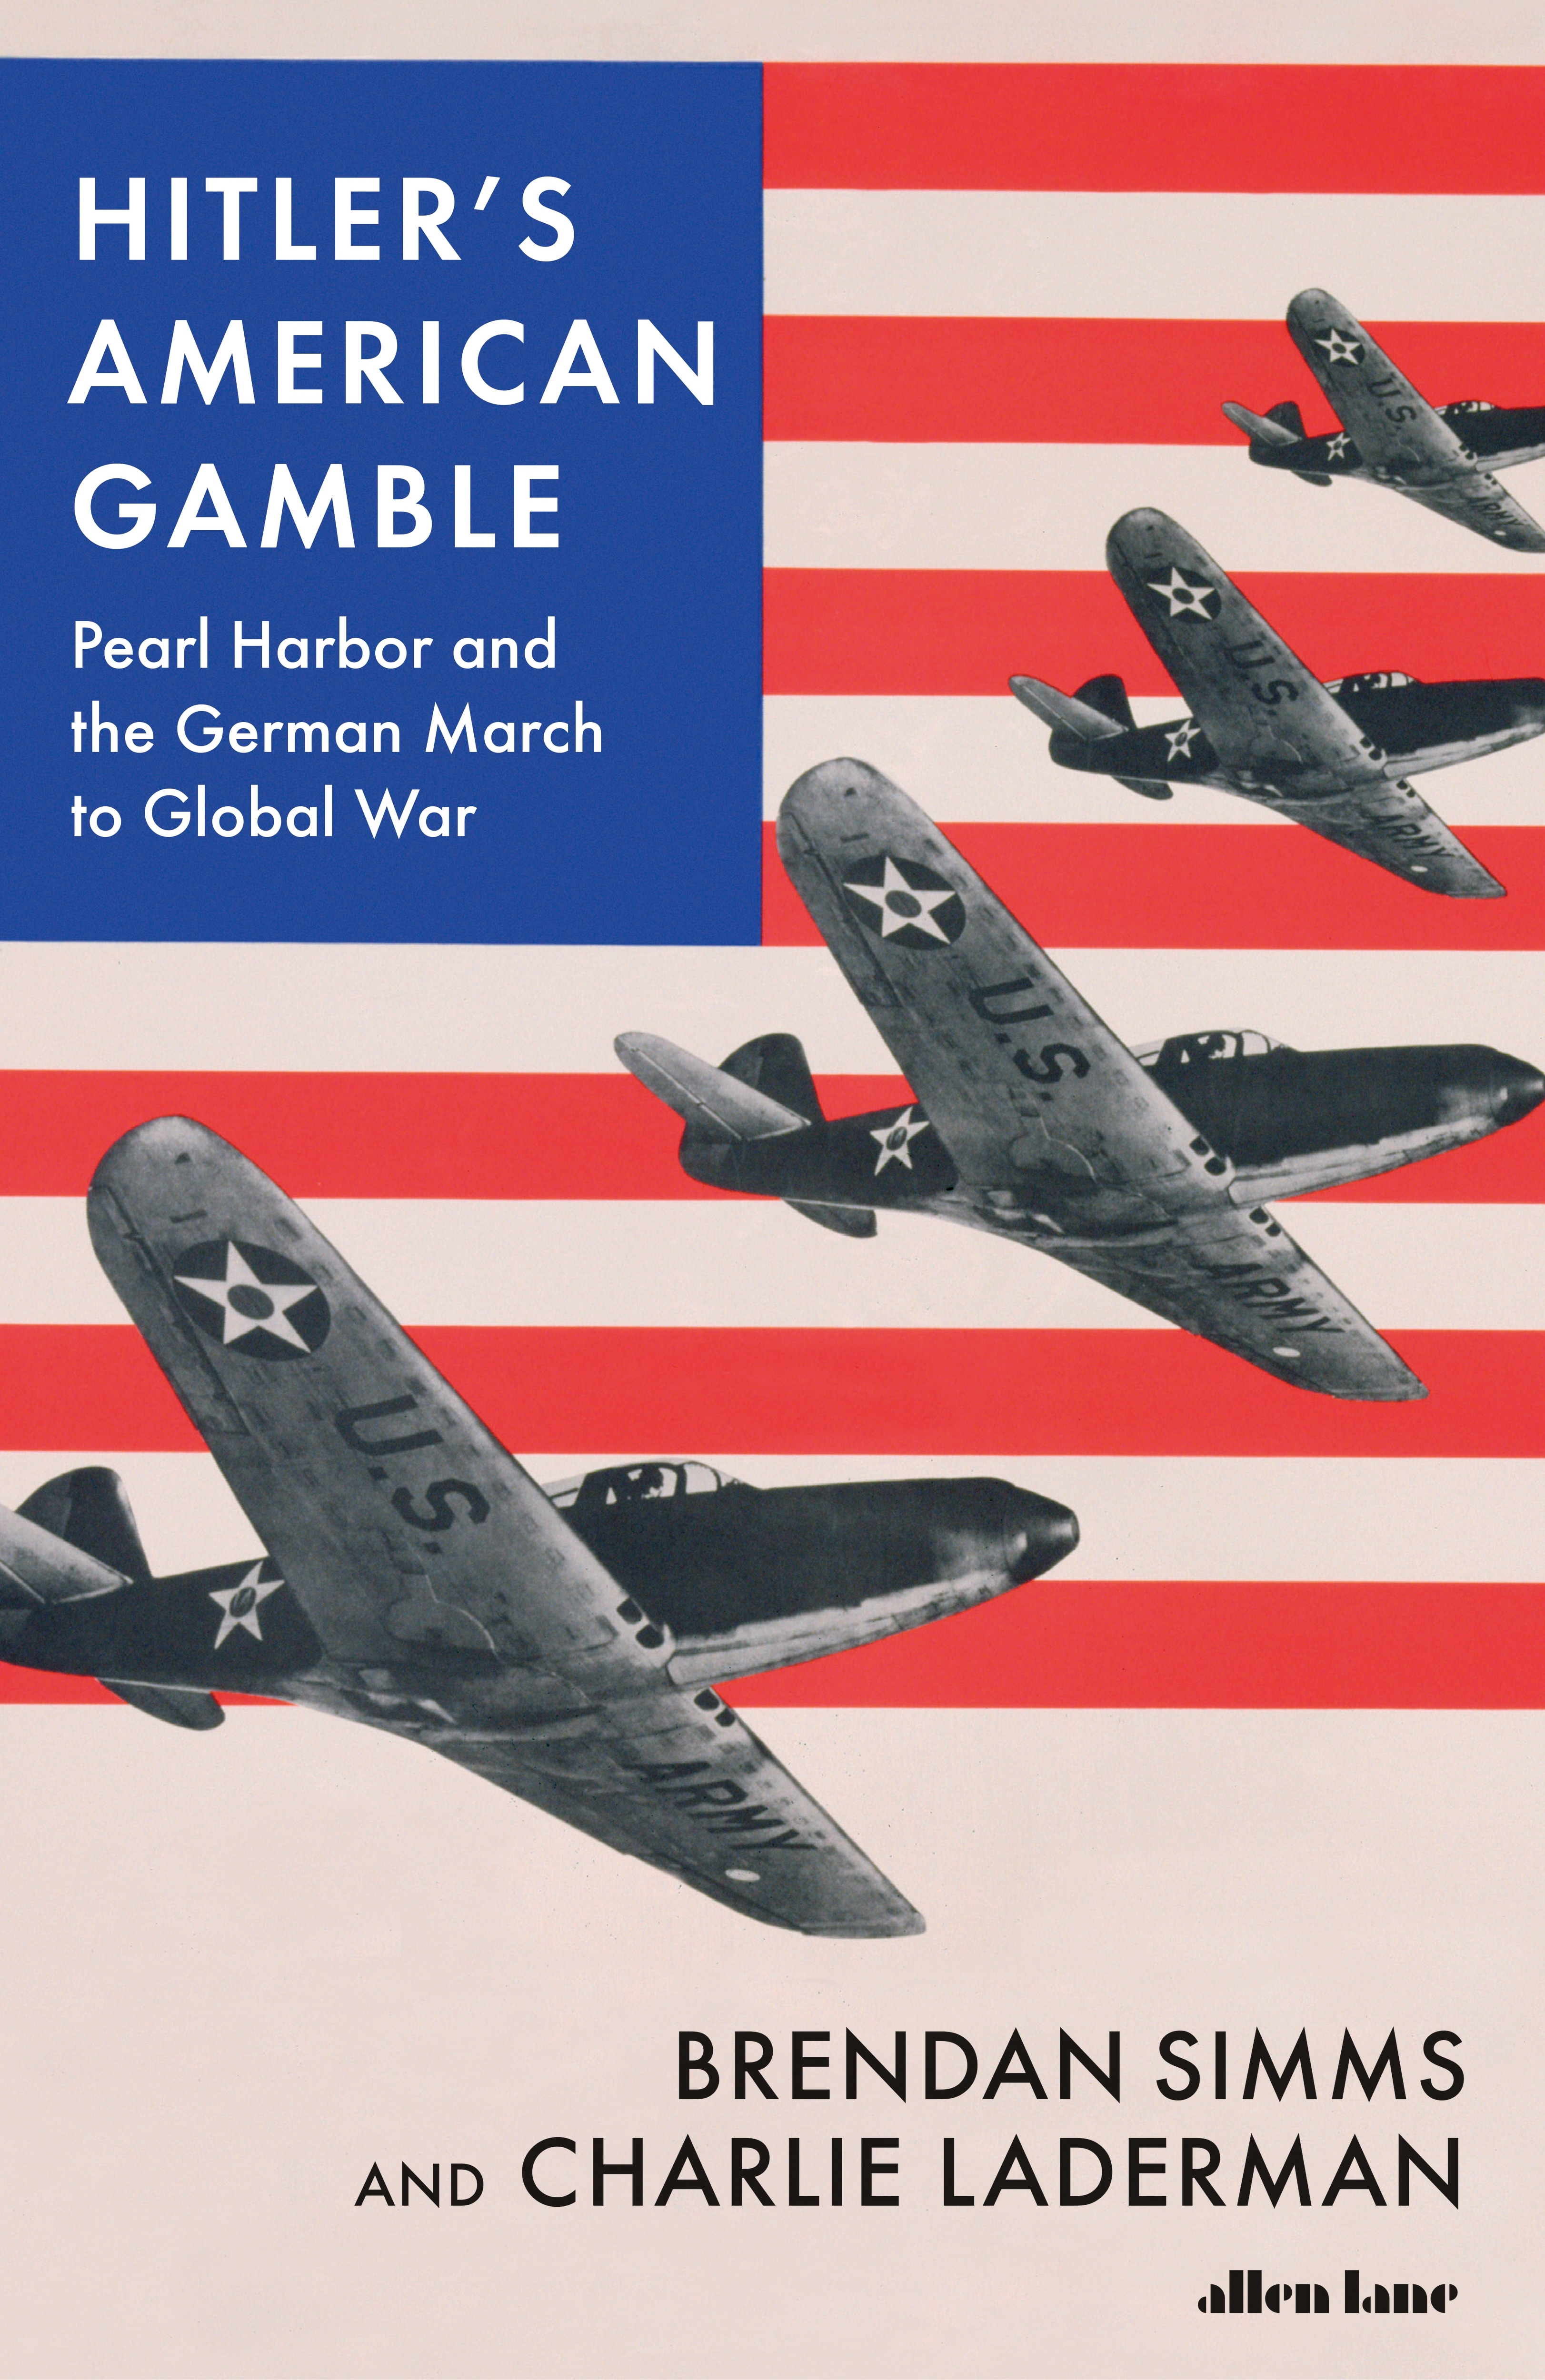 Book “Hitler's American Gamble” by Brendan Simms, Charlie Laderman — October 28, 2021